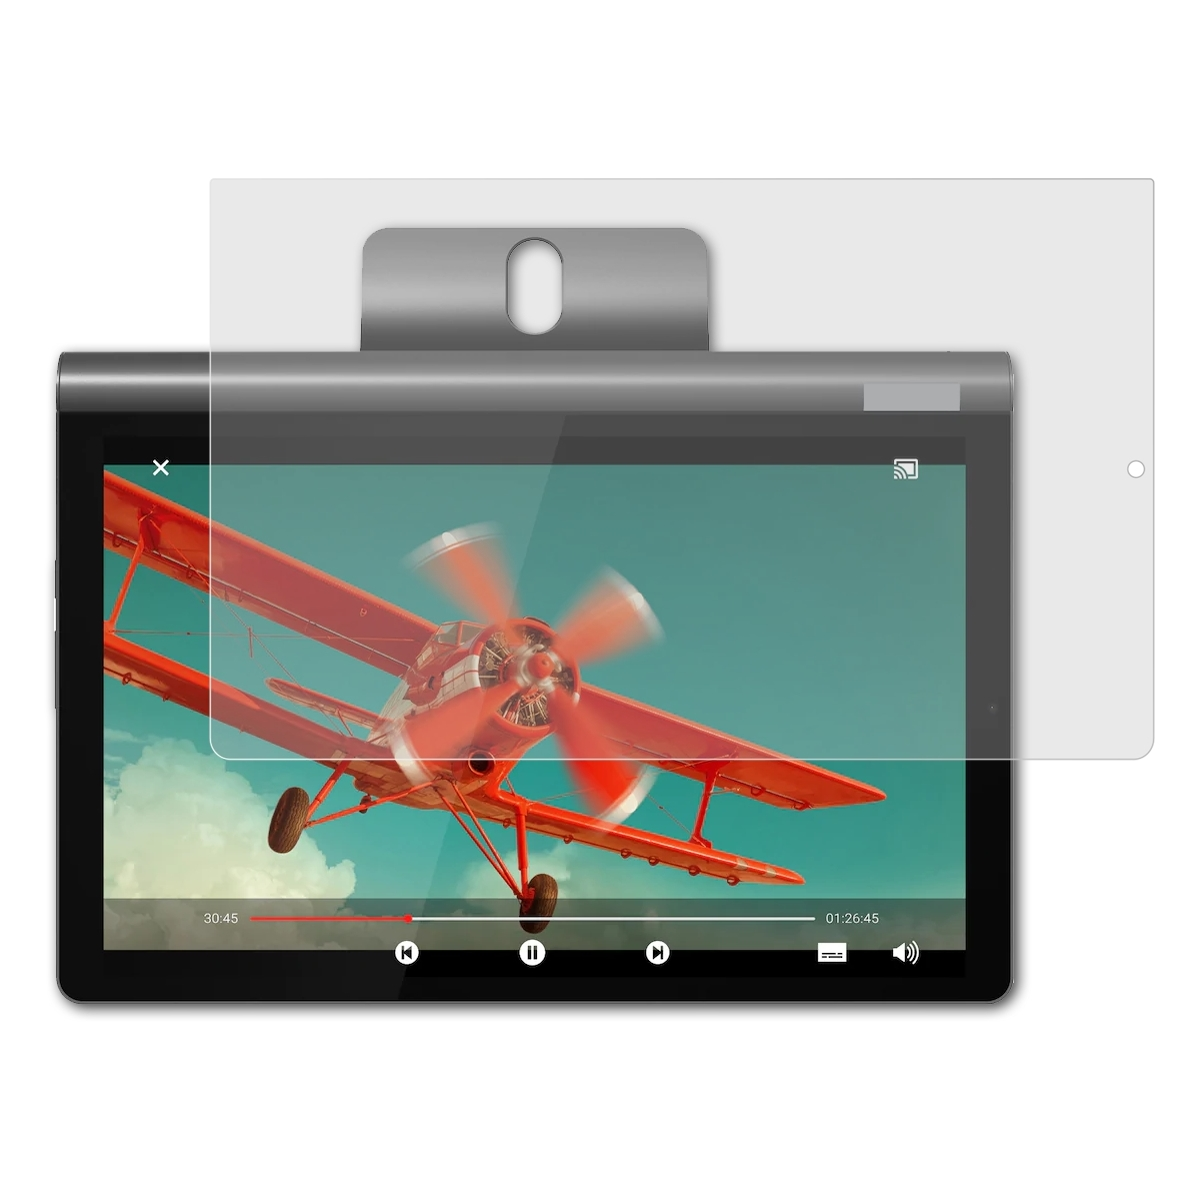 Displayschutz(für Yoga ATFOLIX Lenovo FX-Antireflex 2x Tab 10) Smart